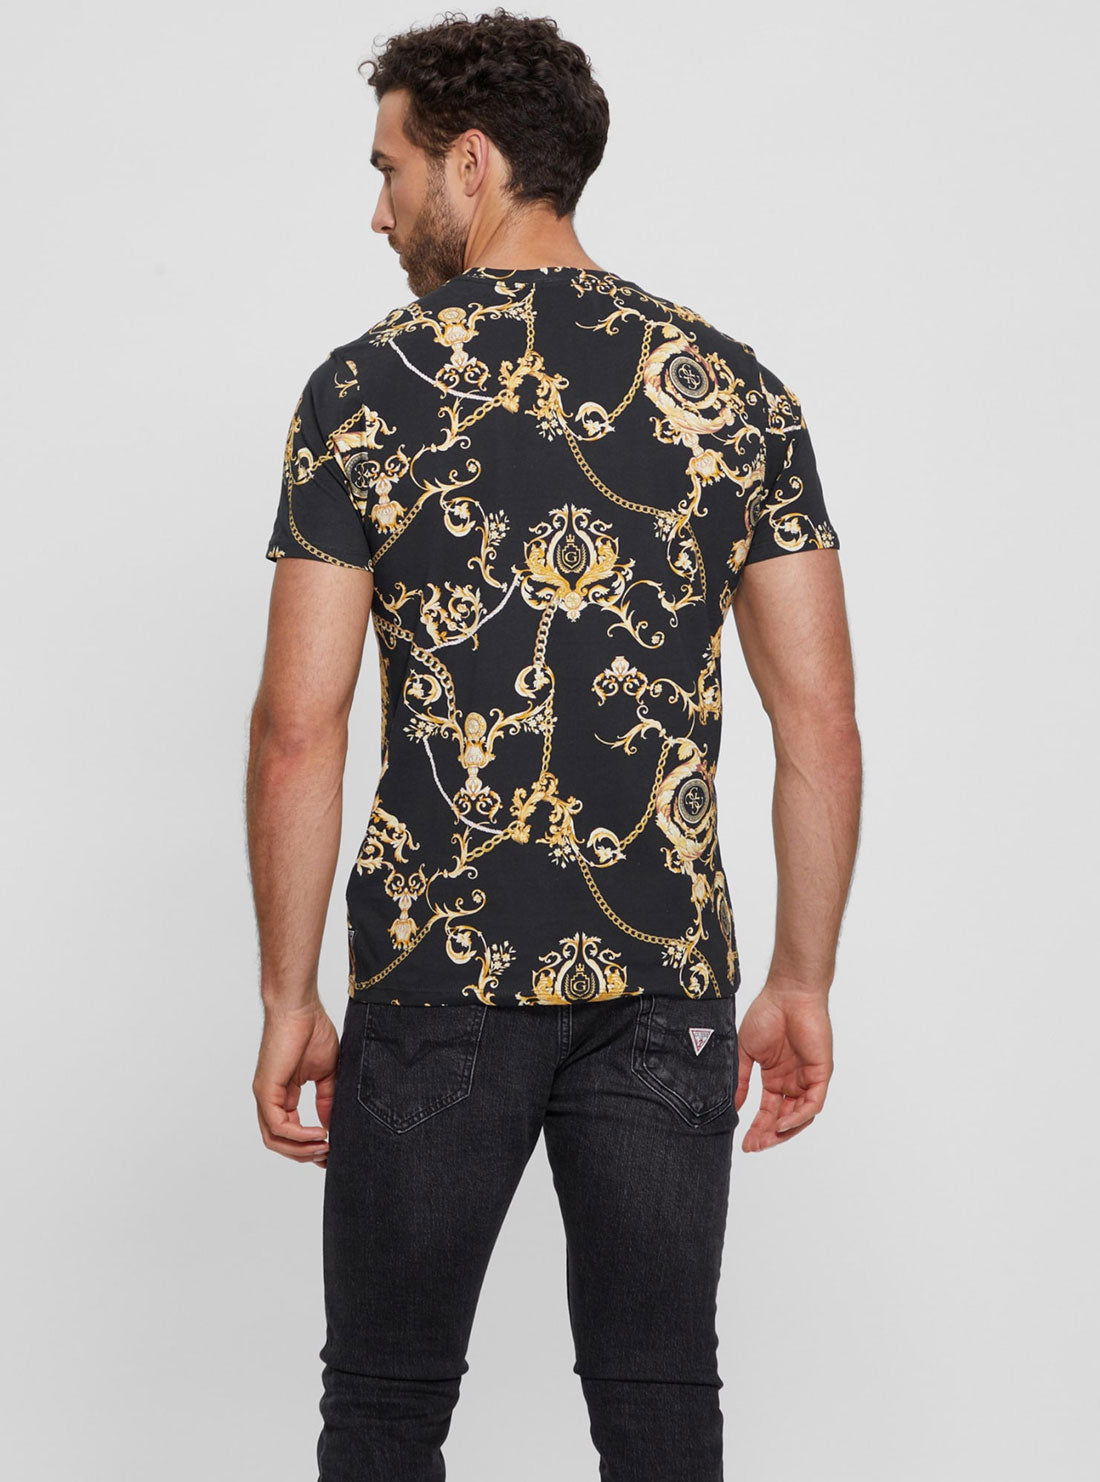 GUESS Black Gold Chain Print T-Shirt back view